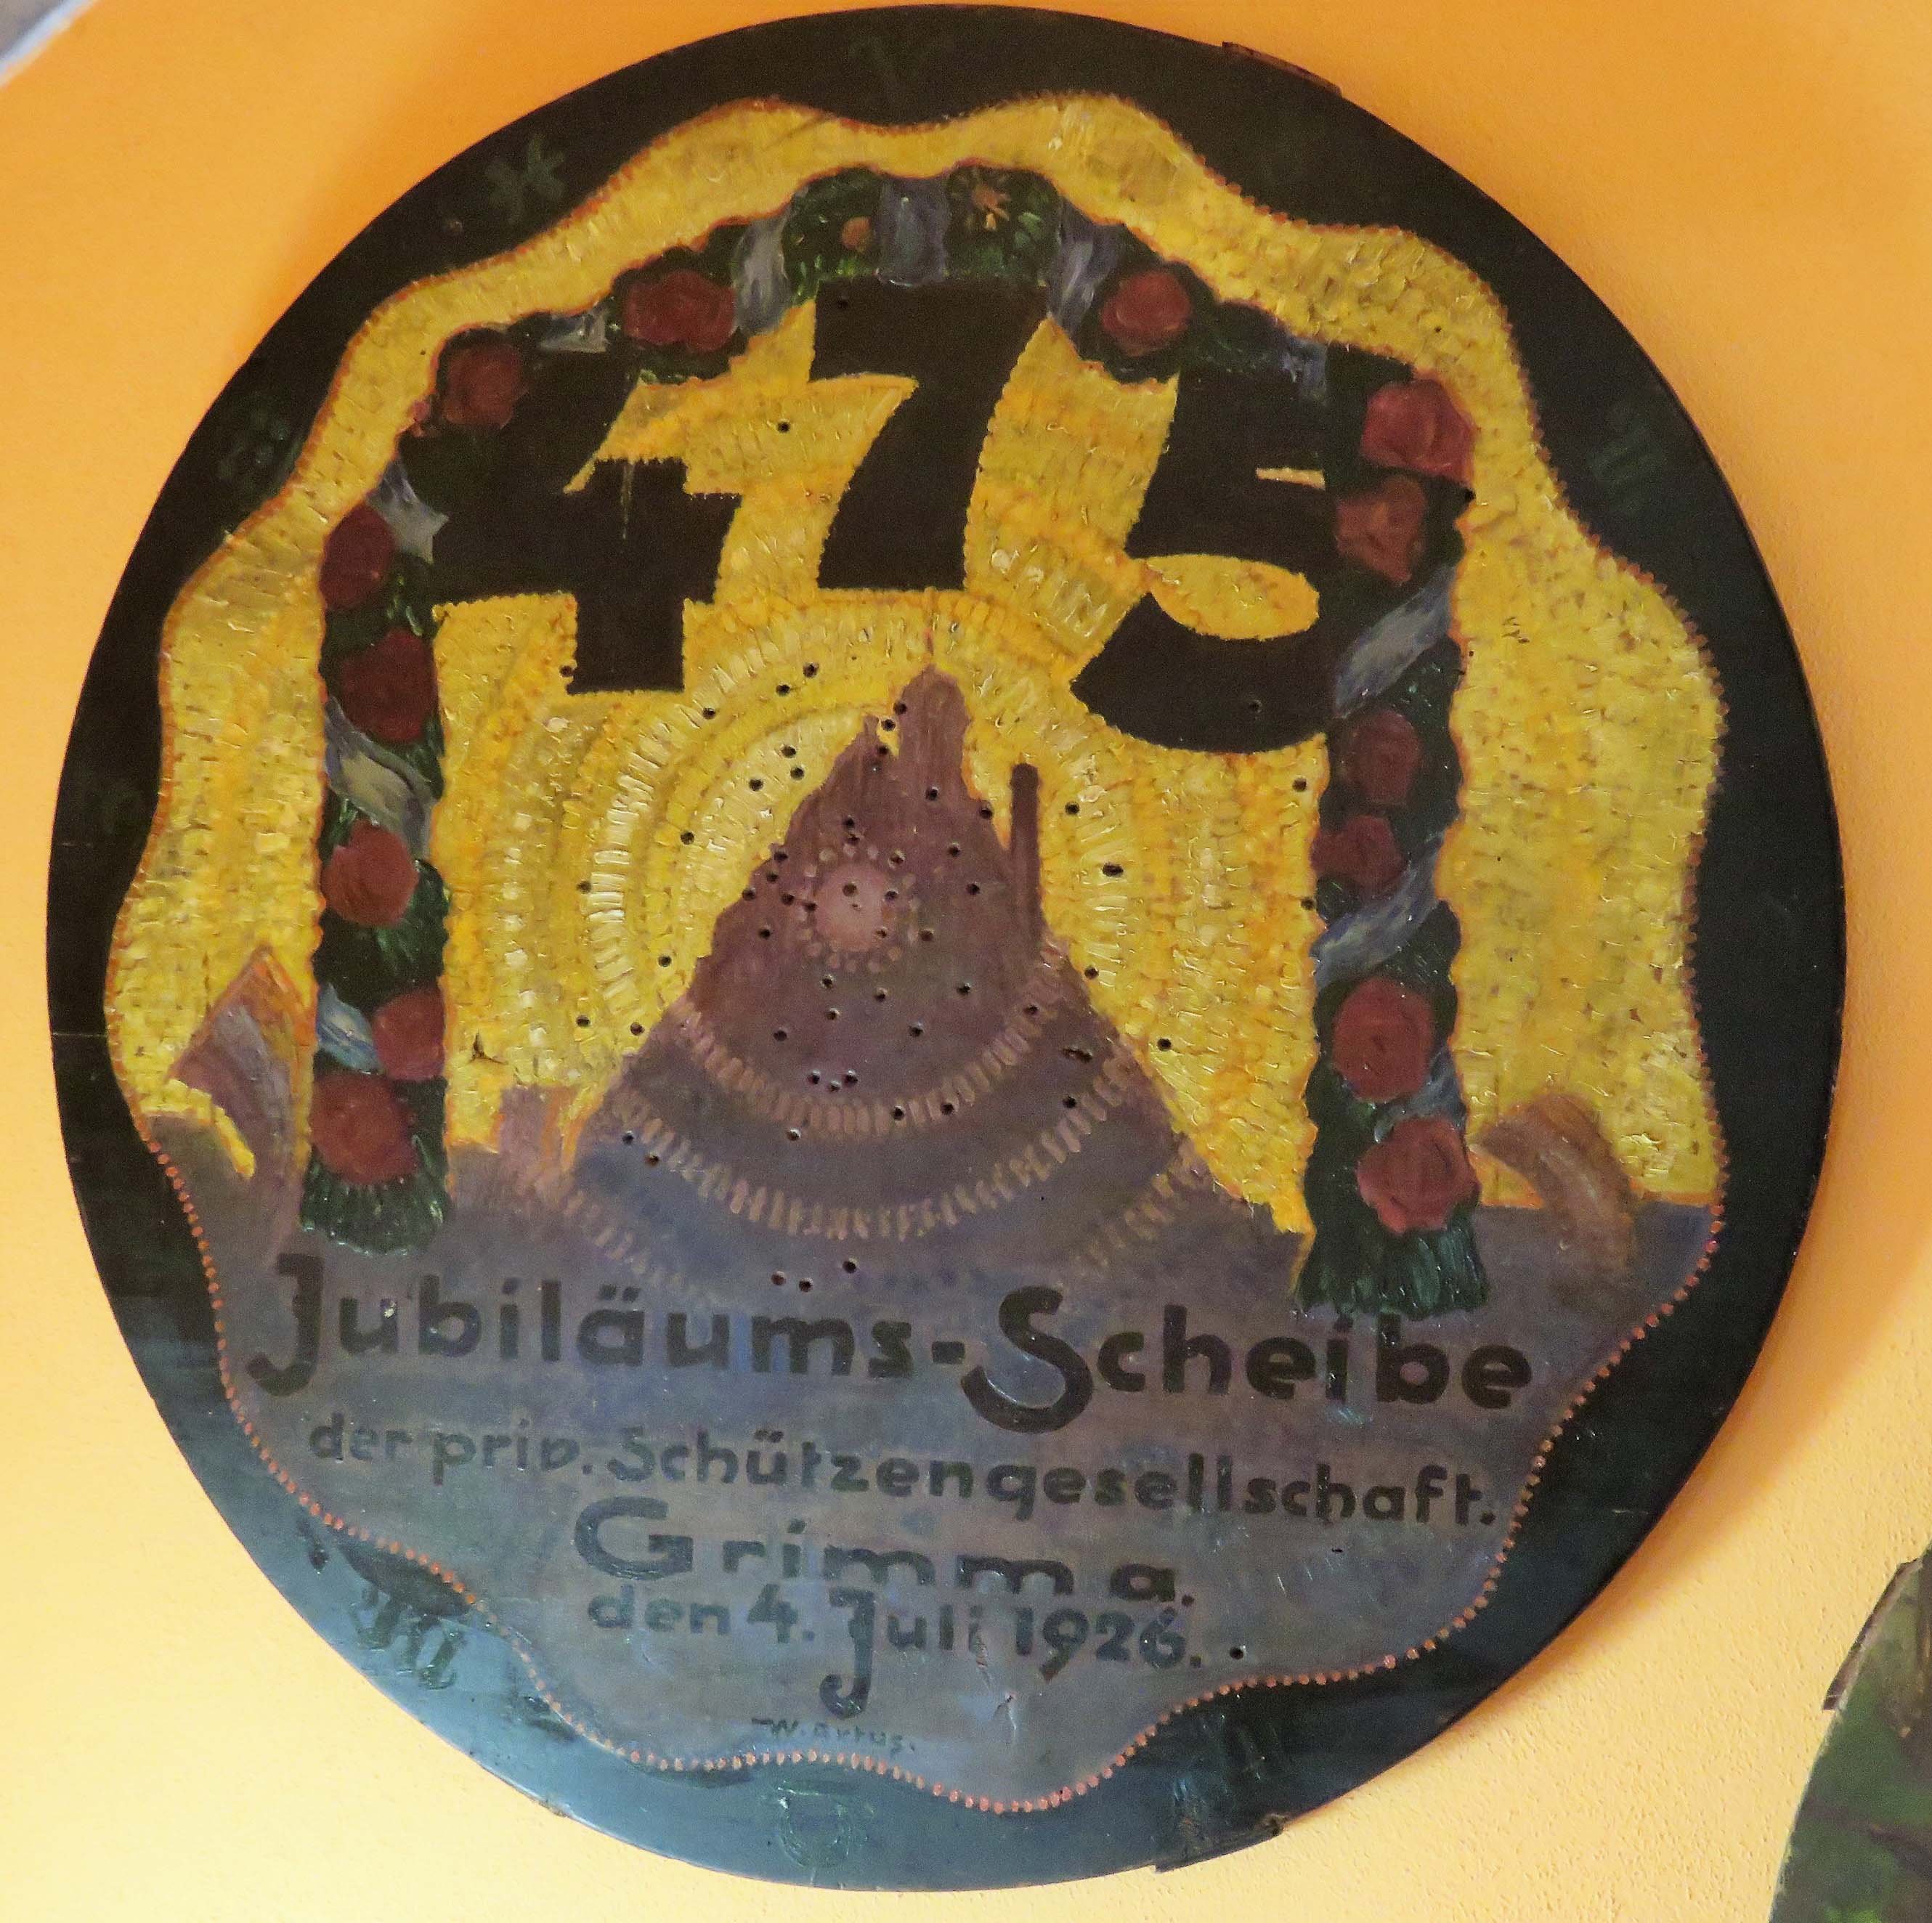 Jubiläums-Scheibe: Jubiläumsscheibe der priv. Schützengesellschaft Grimma (Kreismuseum Grimma RR-F)